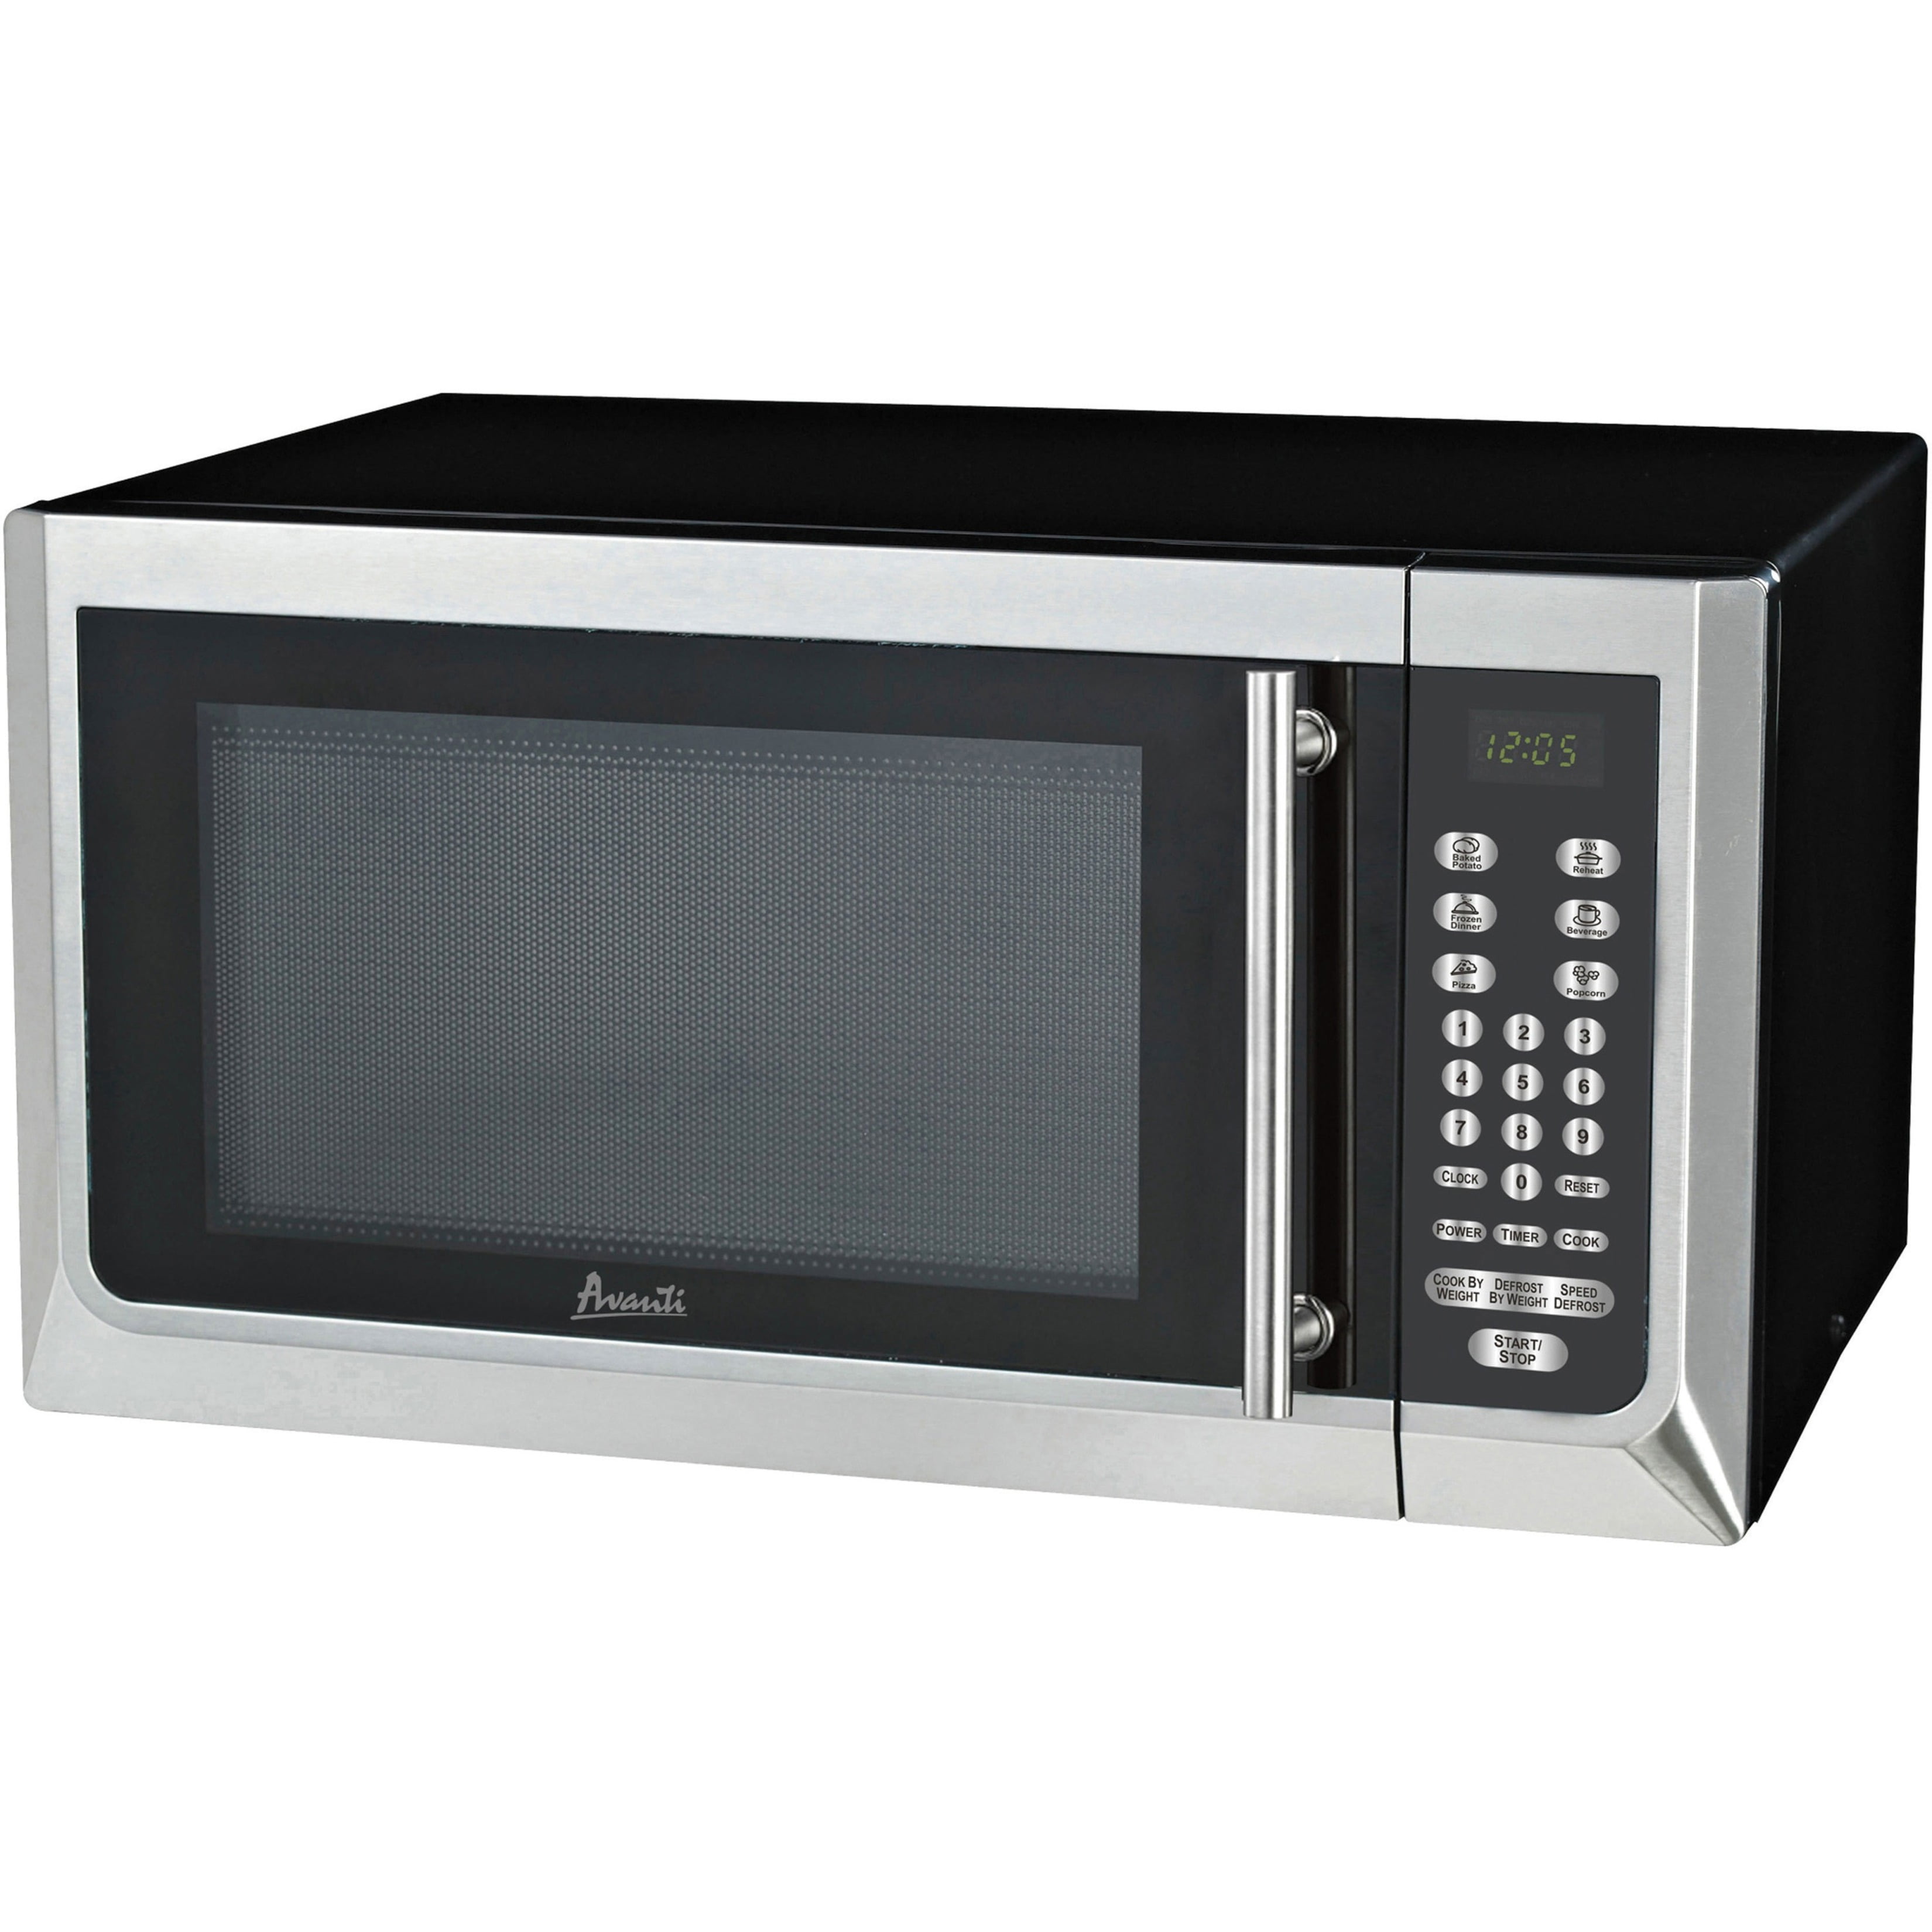 Avanti mo7191tw Microwave Oven 